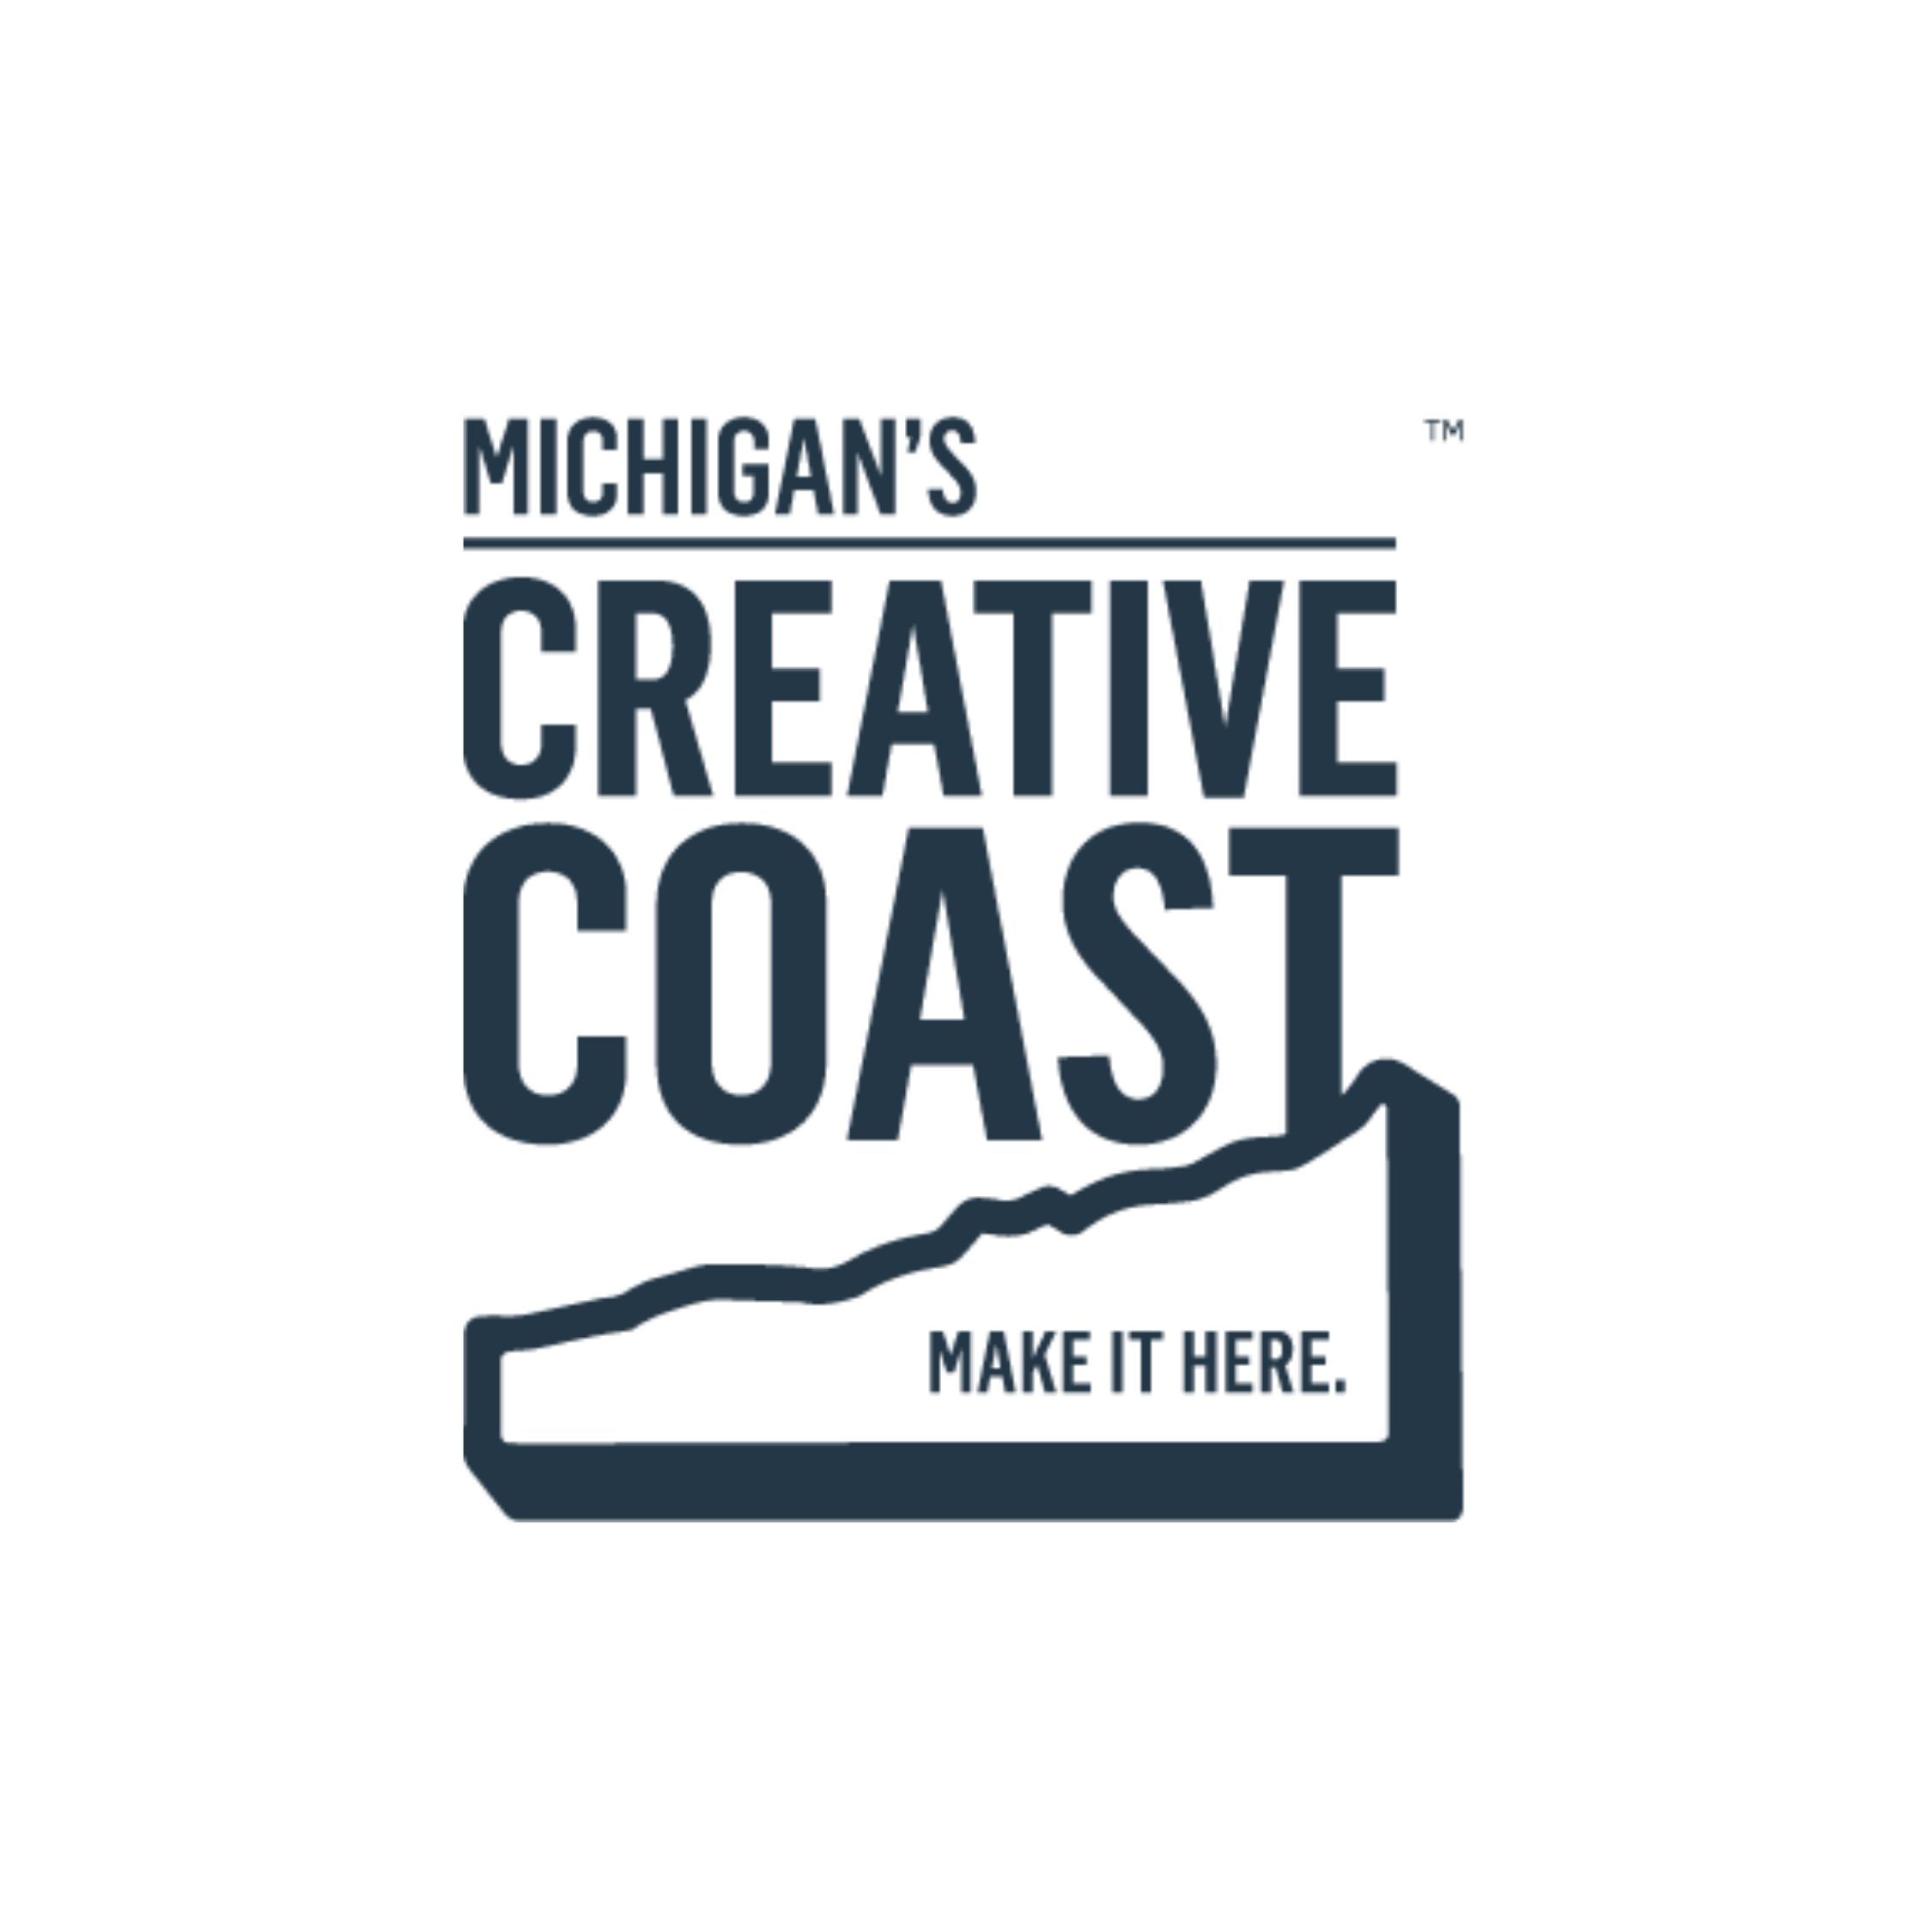 Michigan_s Creative Coast.png